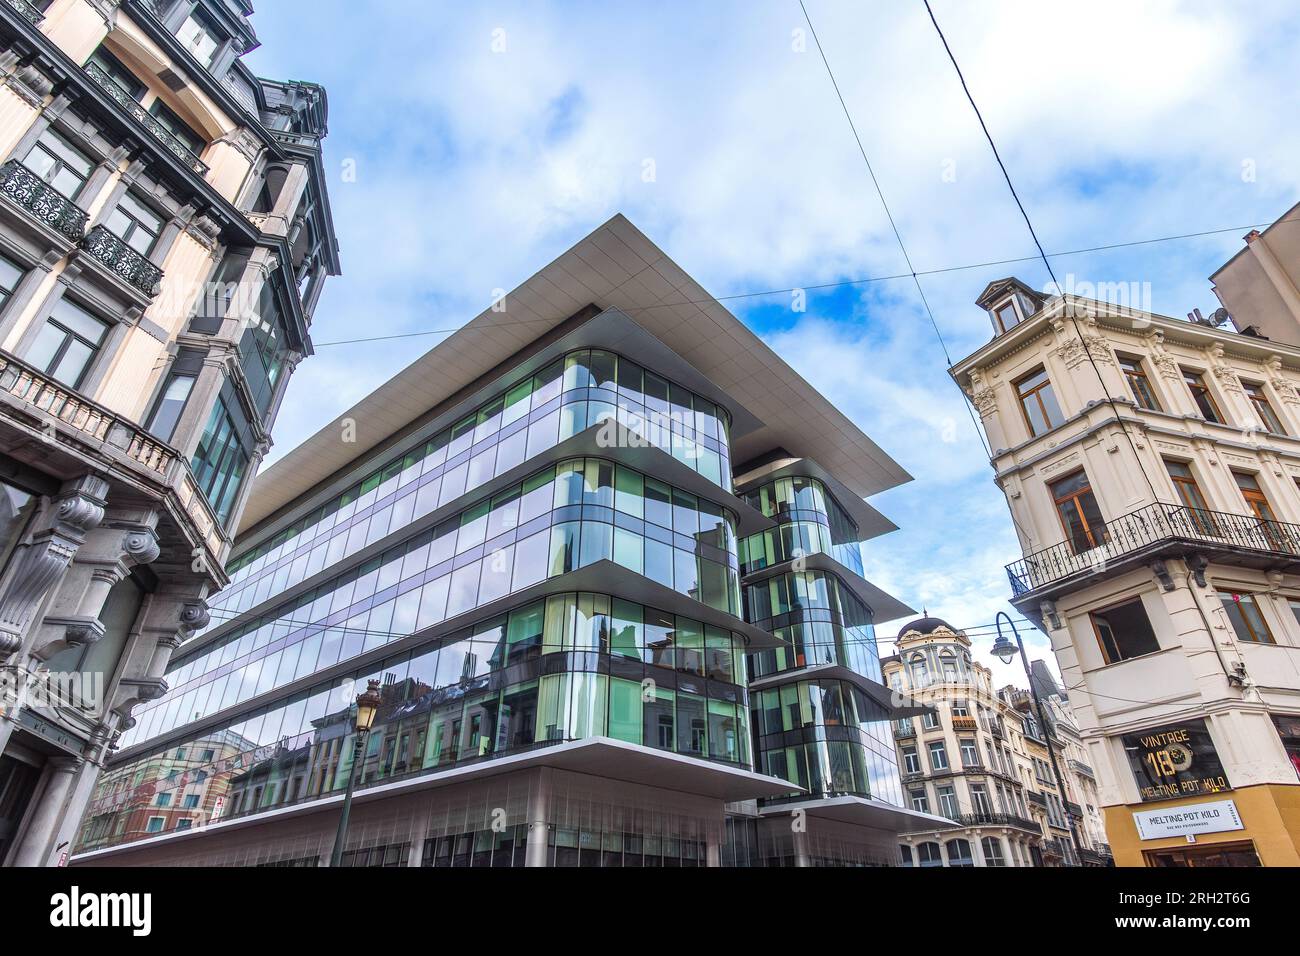 New modern office building on corner of Rue Sainte-Catherine and Rue de la Vge Noire in city center - Brussels, Belgium. Stock Photo